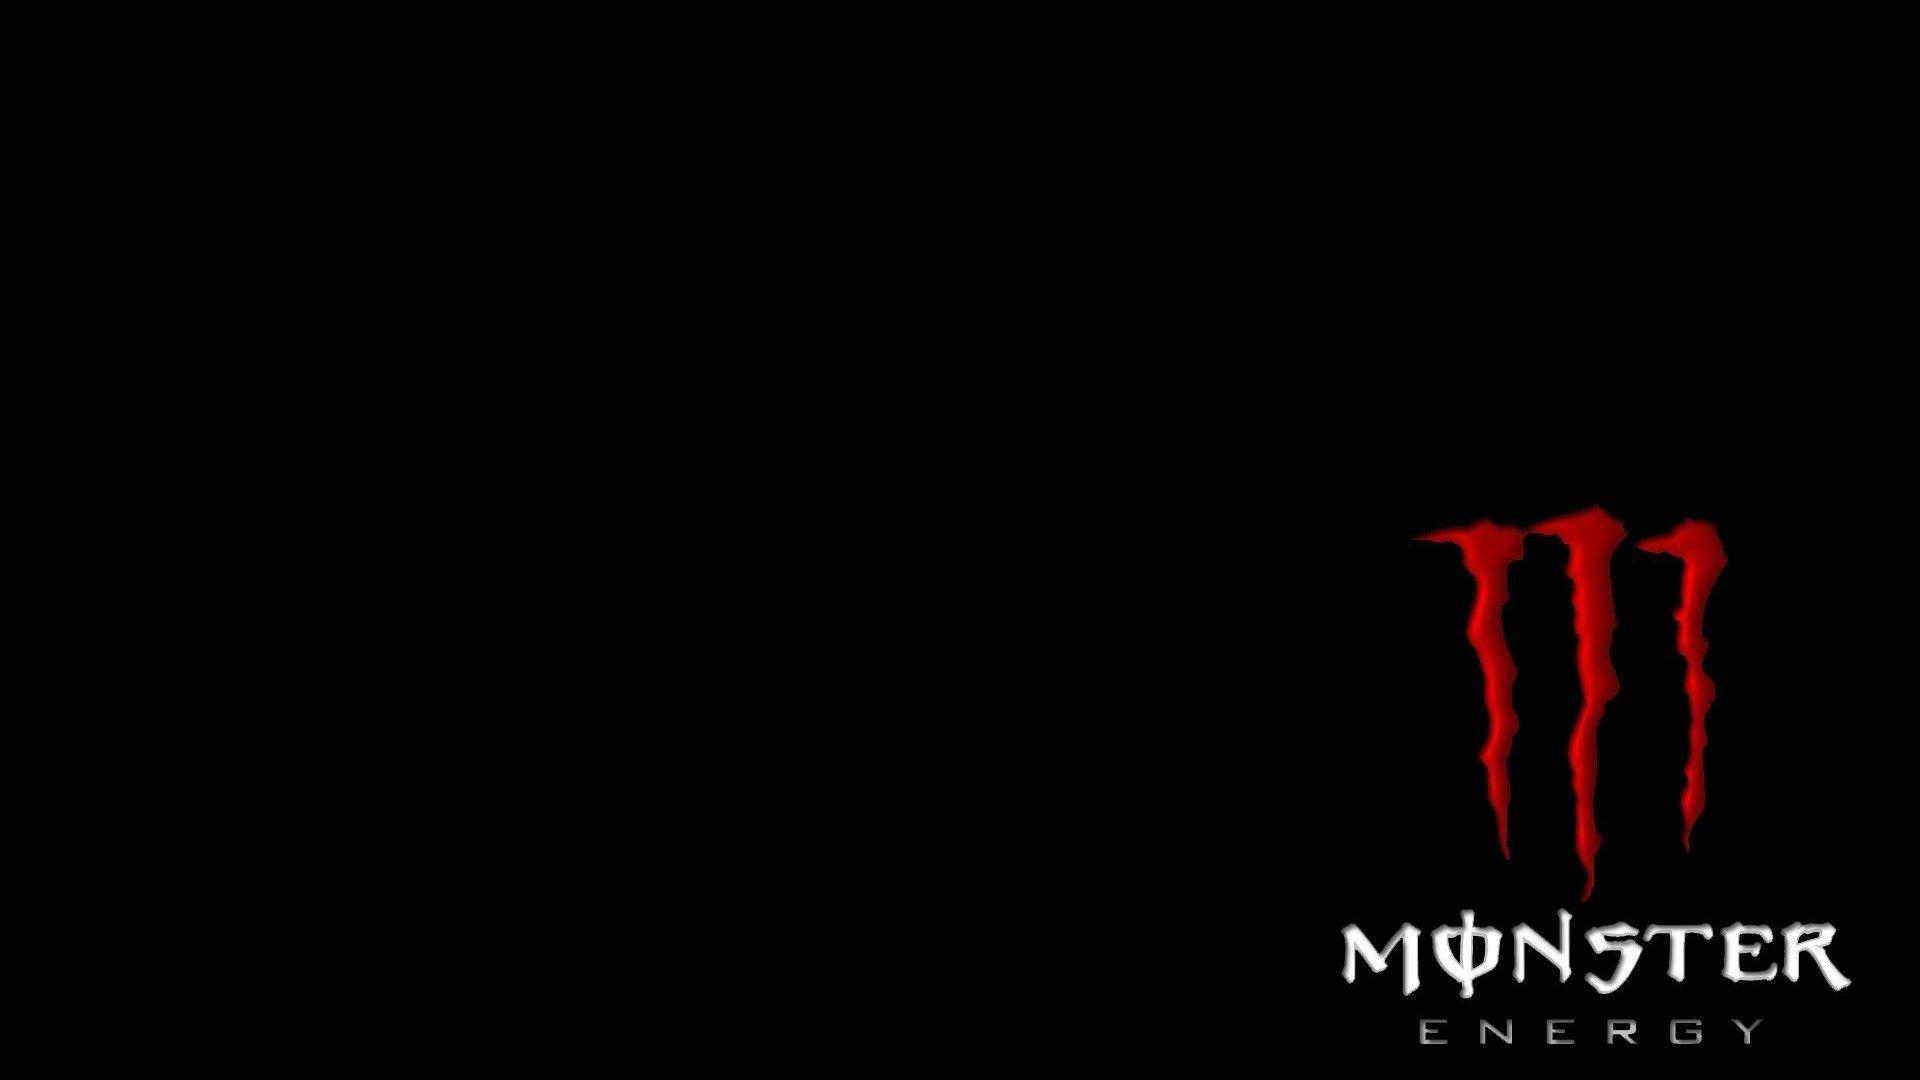 X Black Background Red Monster Energy Wallpaper And Desktop On High